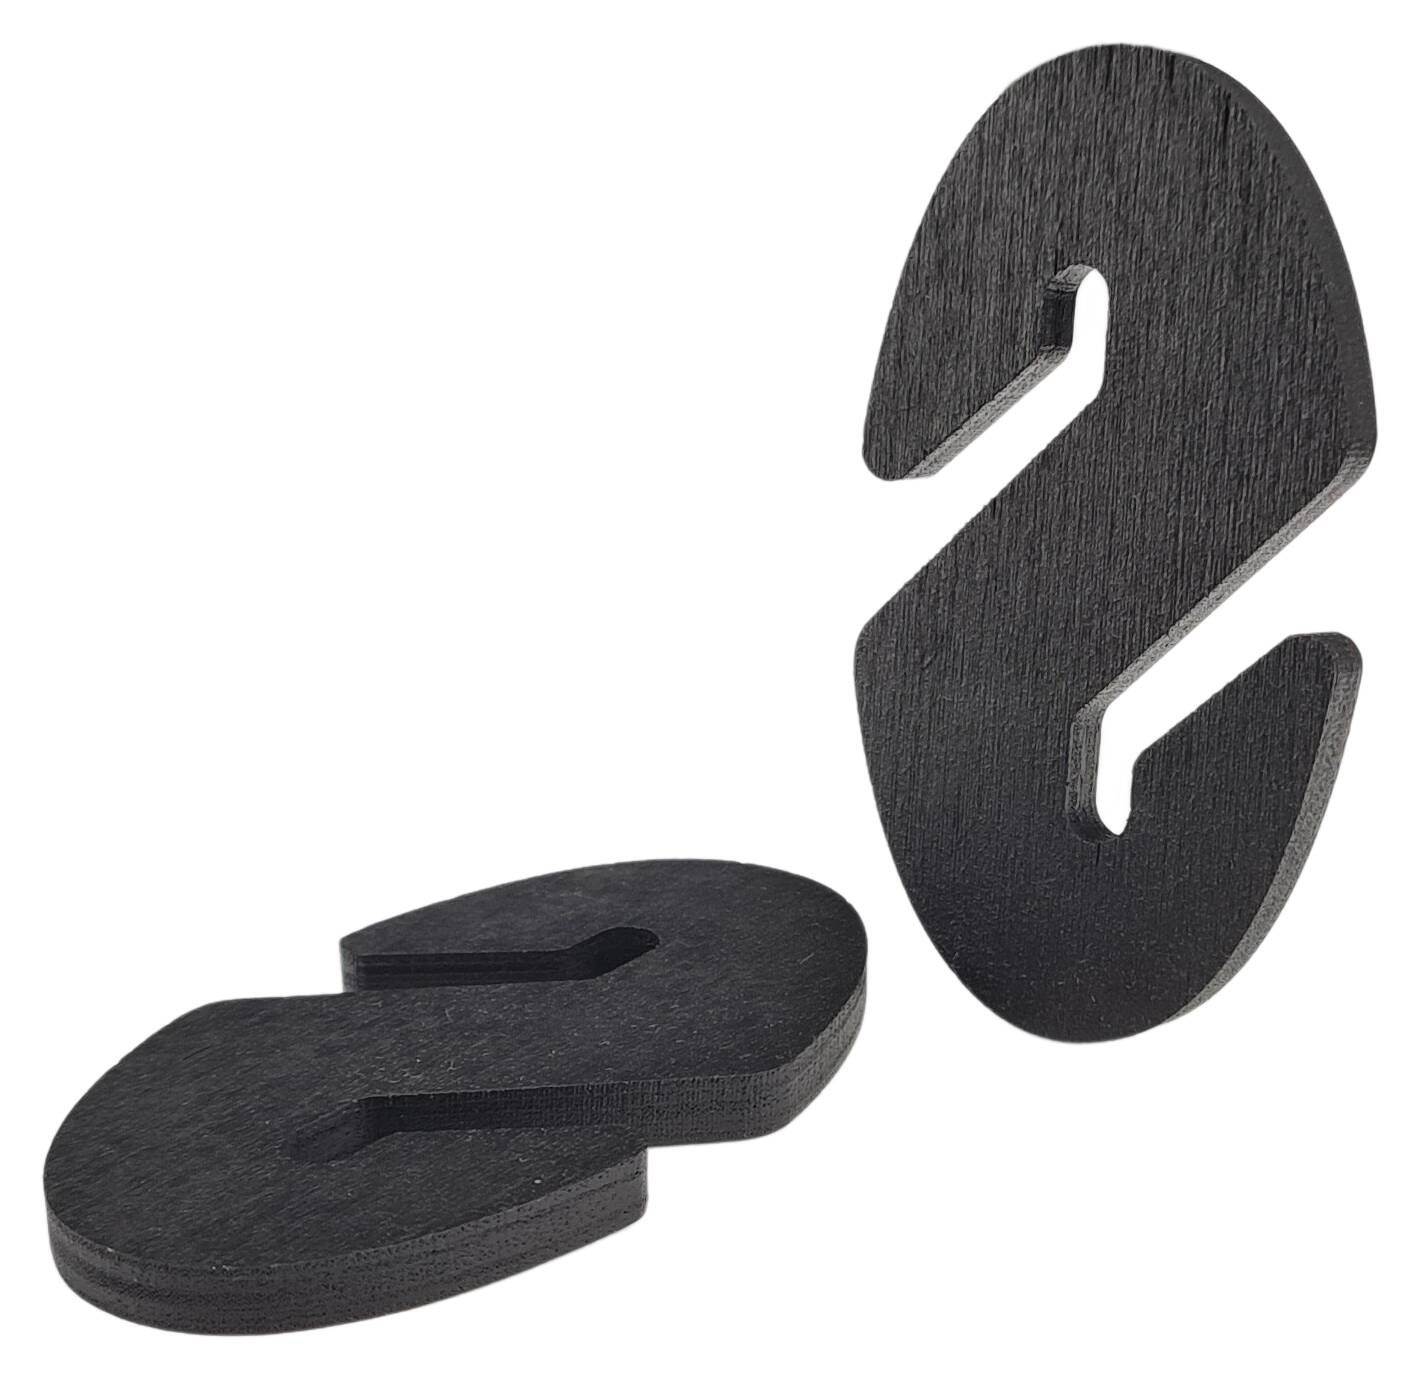 Kabelkürzer Holz 70x38 ovale Form schwarz